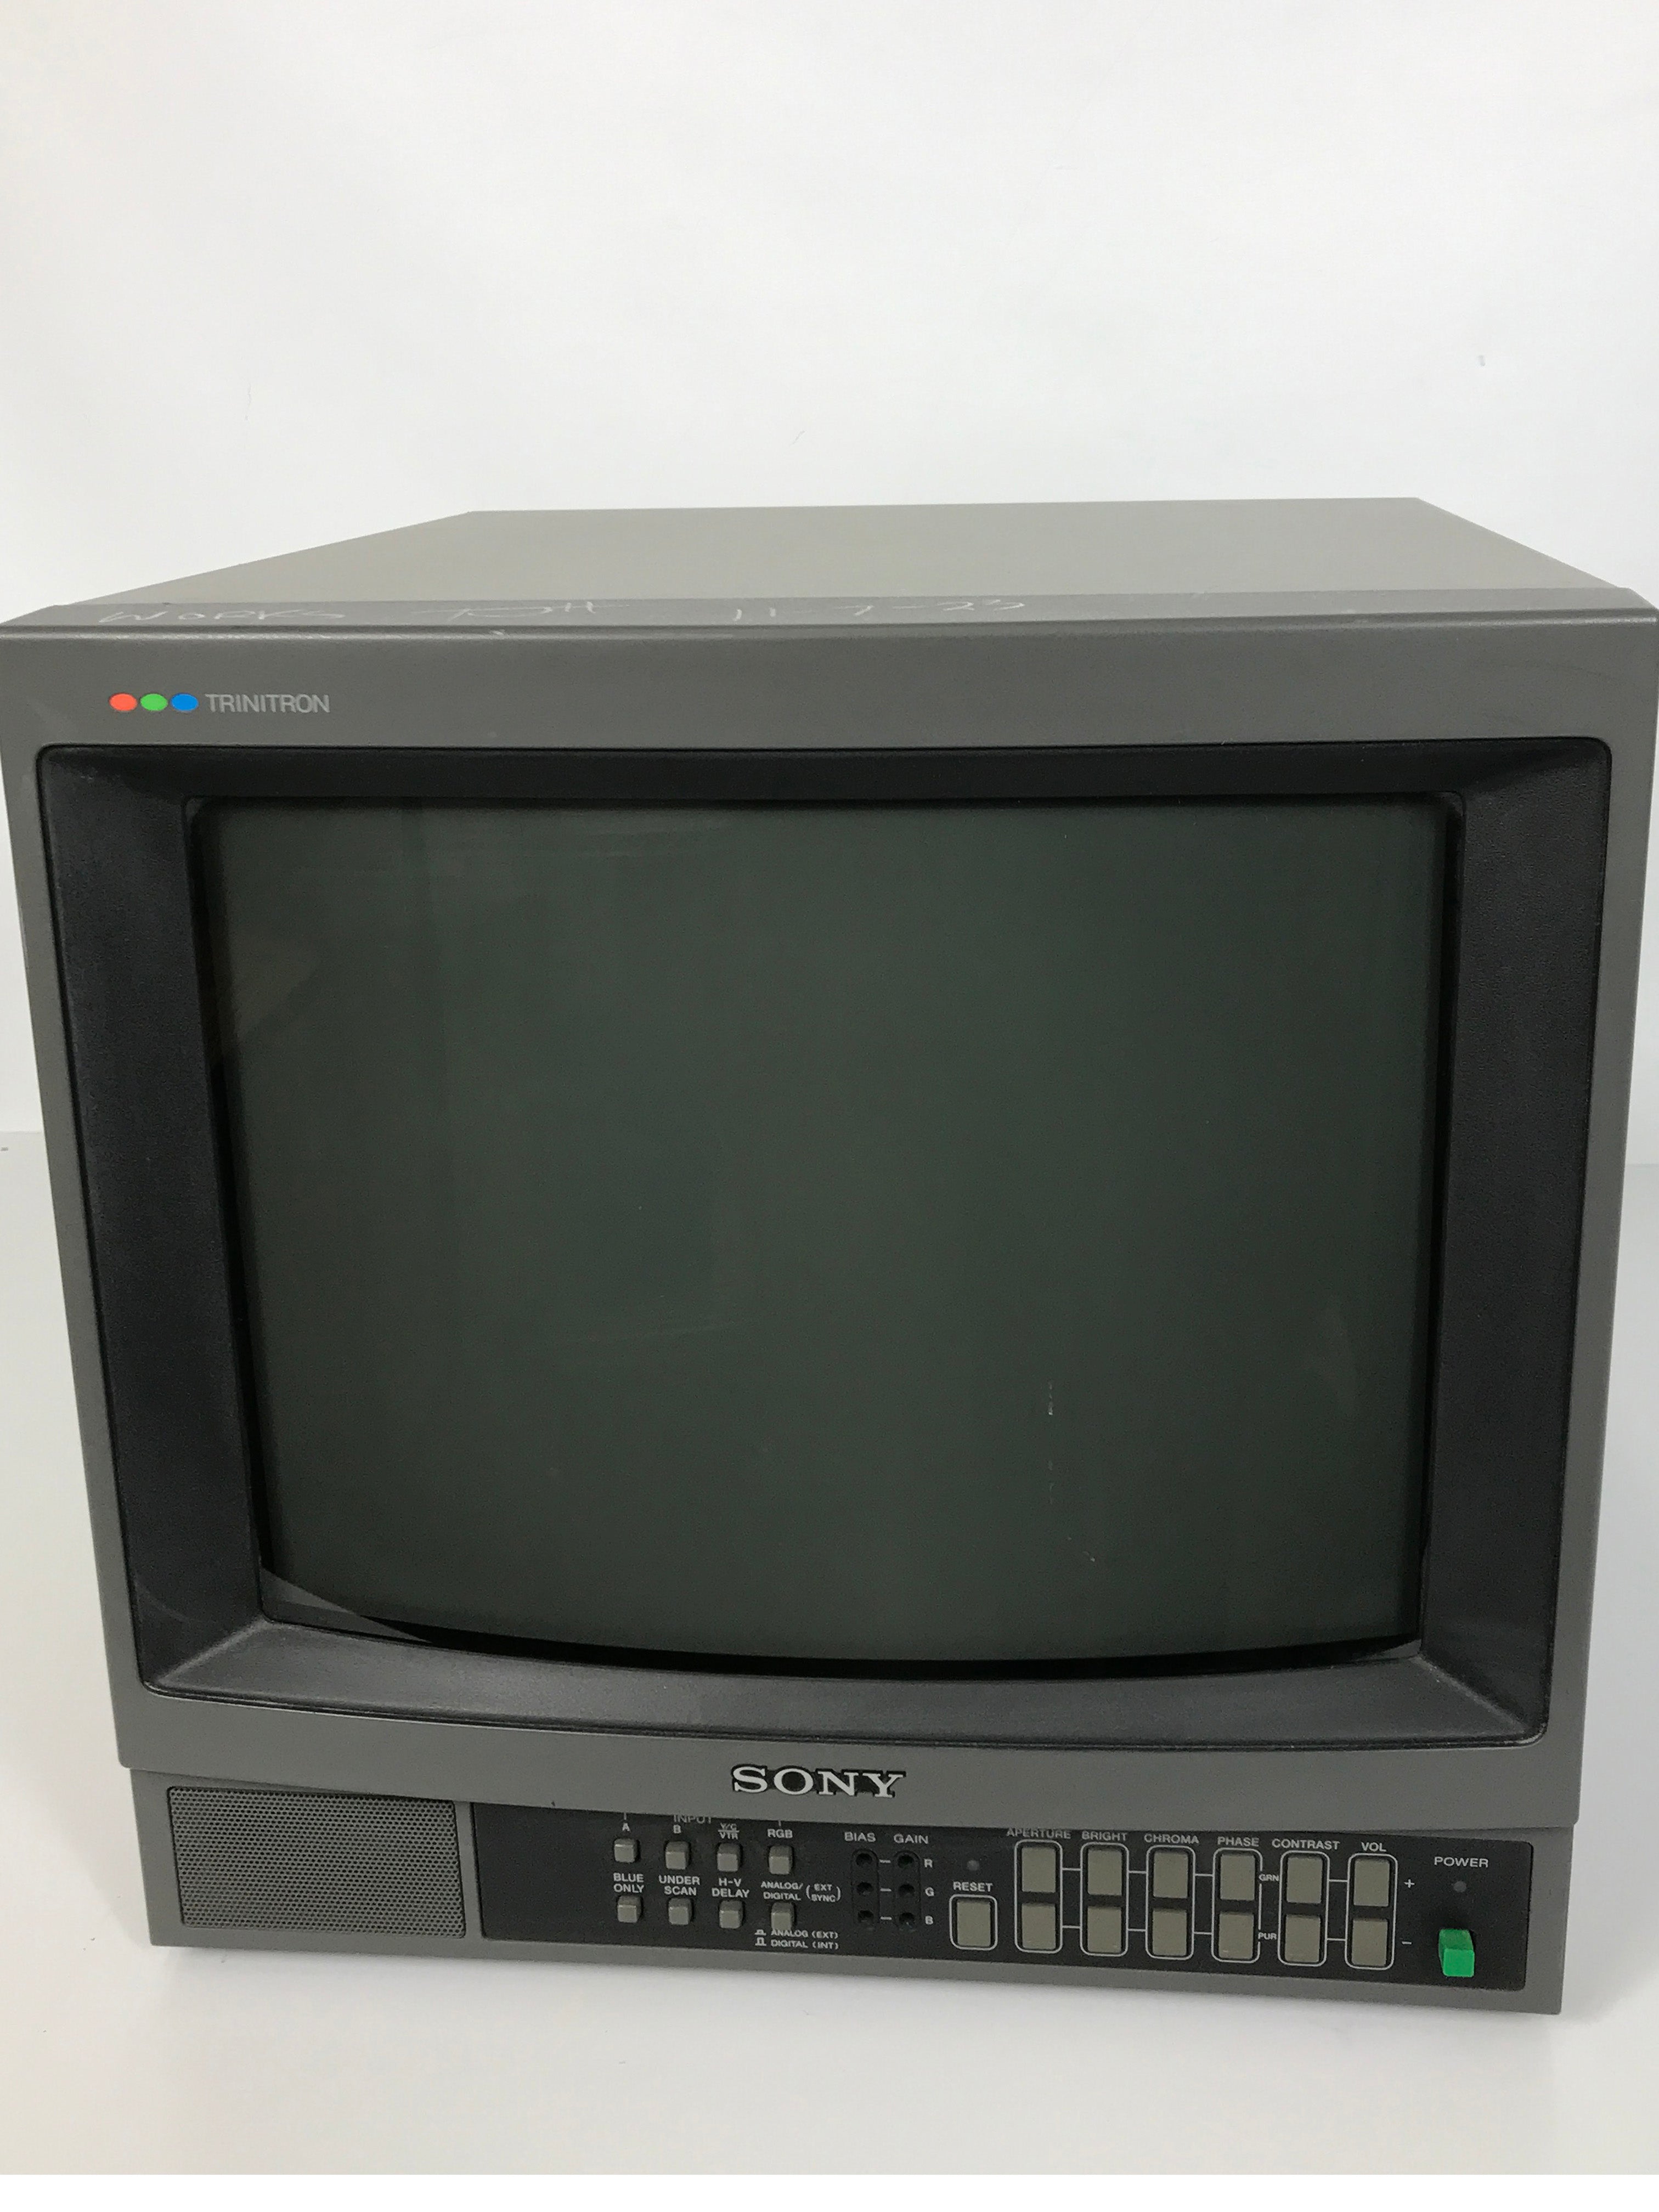 Sony Trinitron PVM-1341 13" Color Video Monitor